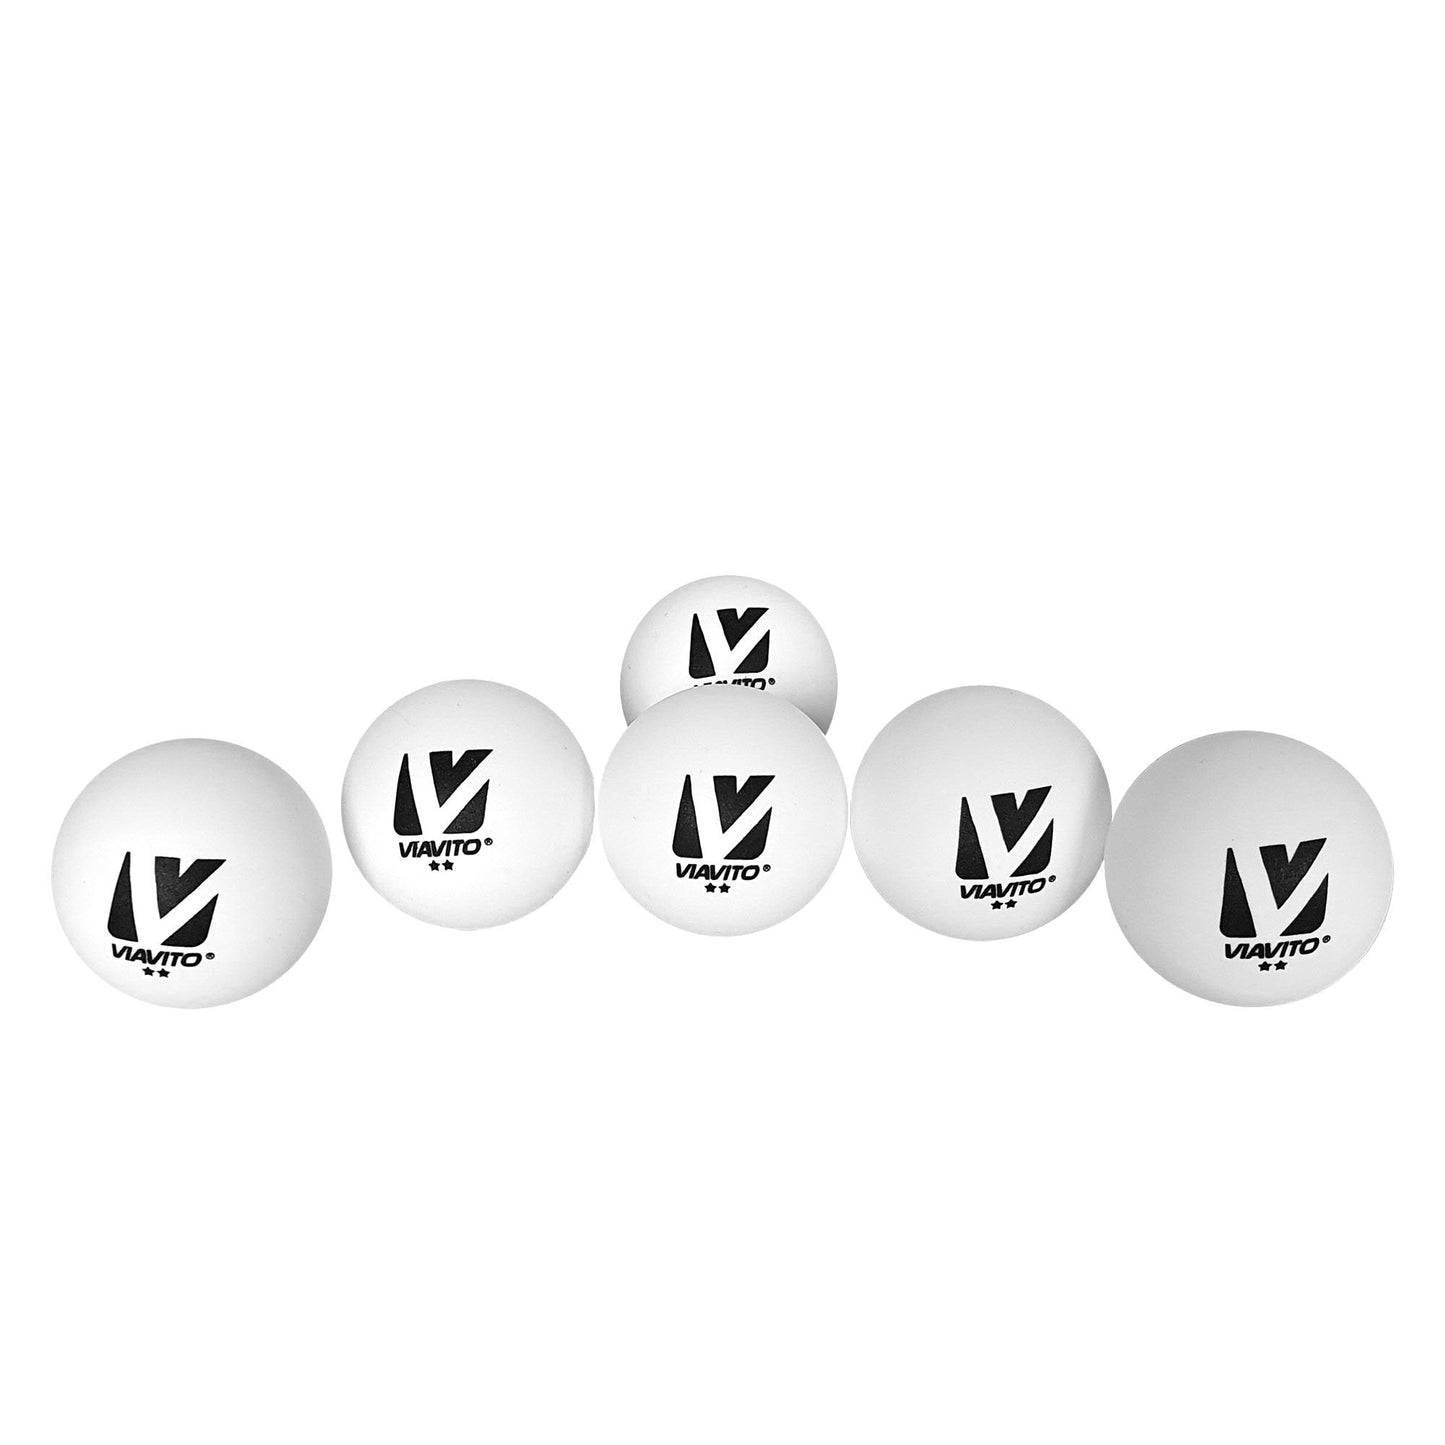 |Viavito Club Adept 2 Star Table Tennis Balls - Pack of 6 - New - Balls Vs|